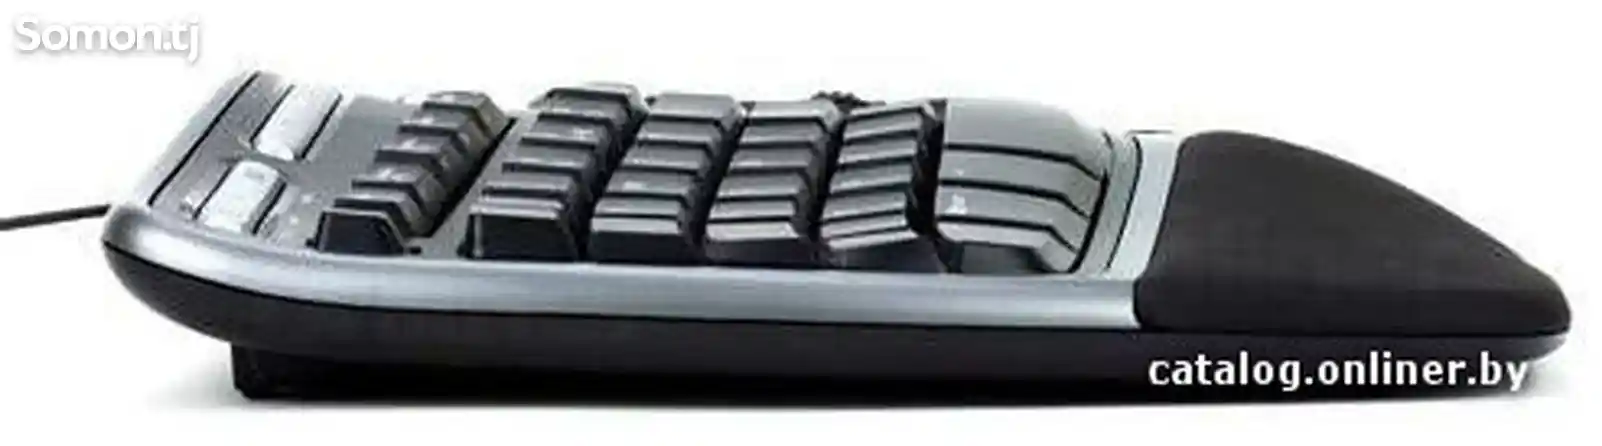 Эргономичная клавиатура Microsoft Natural 4000 v1.0 KU-0462 USB-3